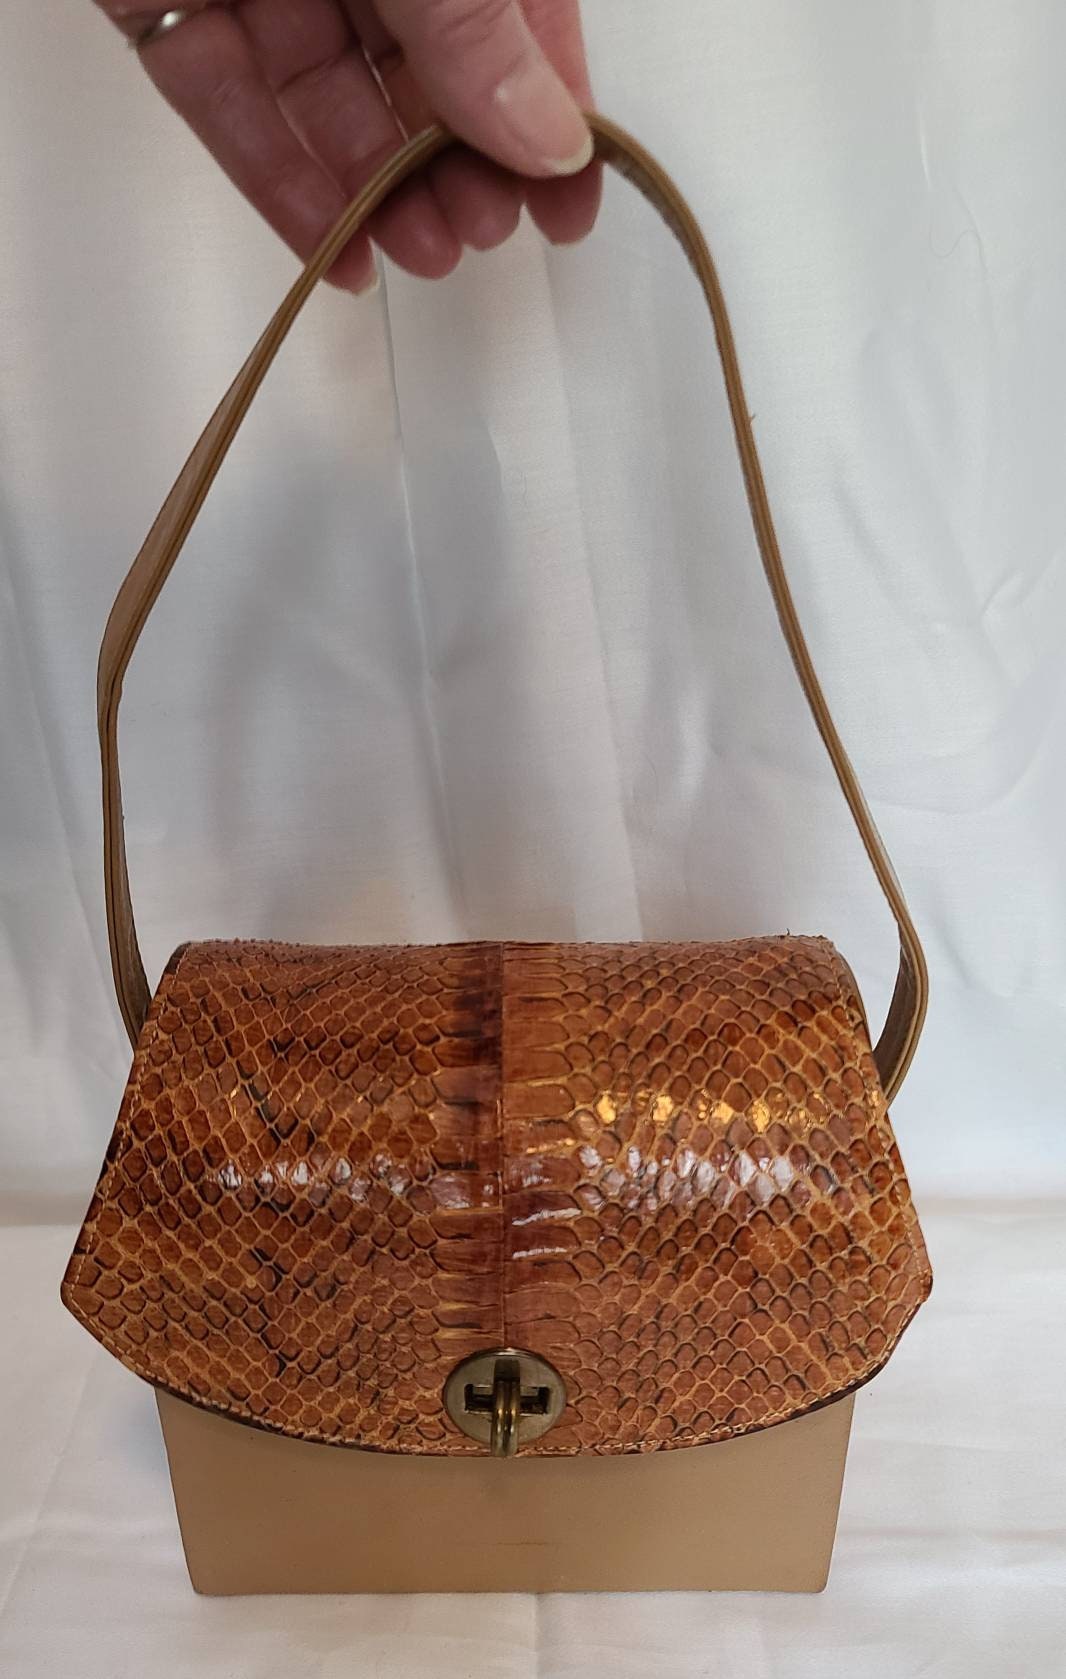 Branco – Retro clip purse / coin wallet size S for women, made out of  leather, cognac brown, model 79766 | Jahn Lederwaren